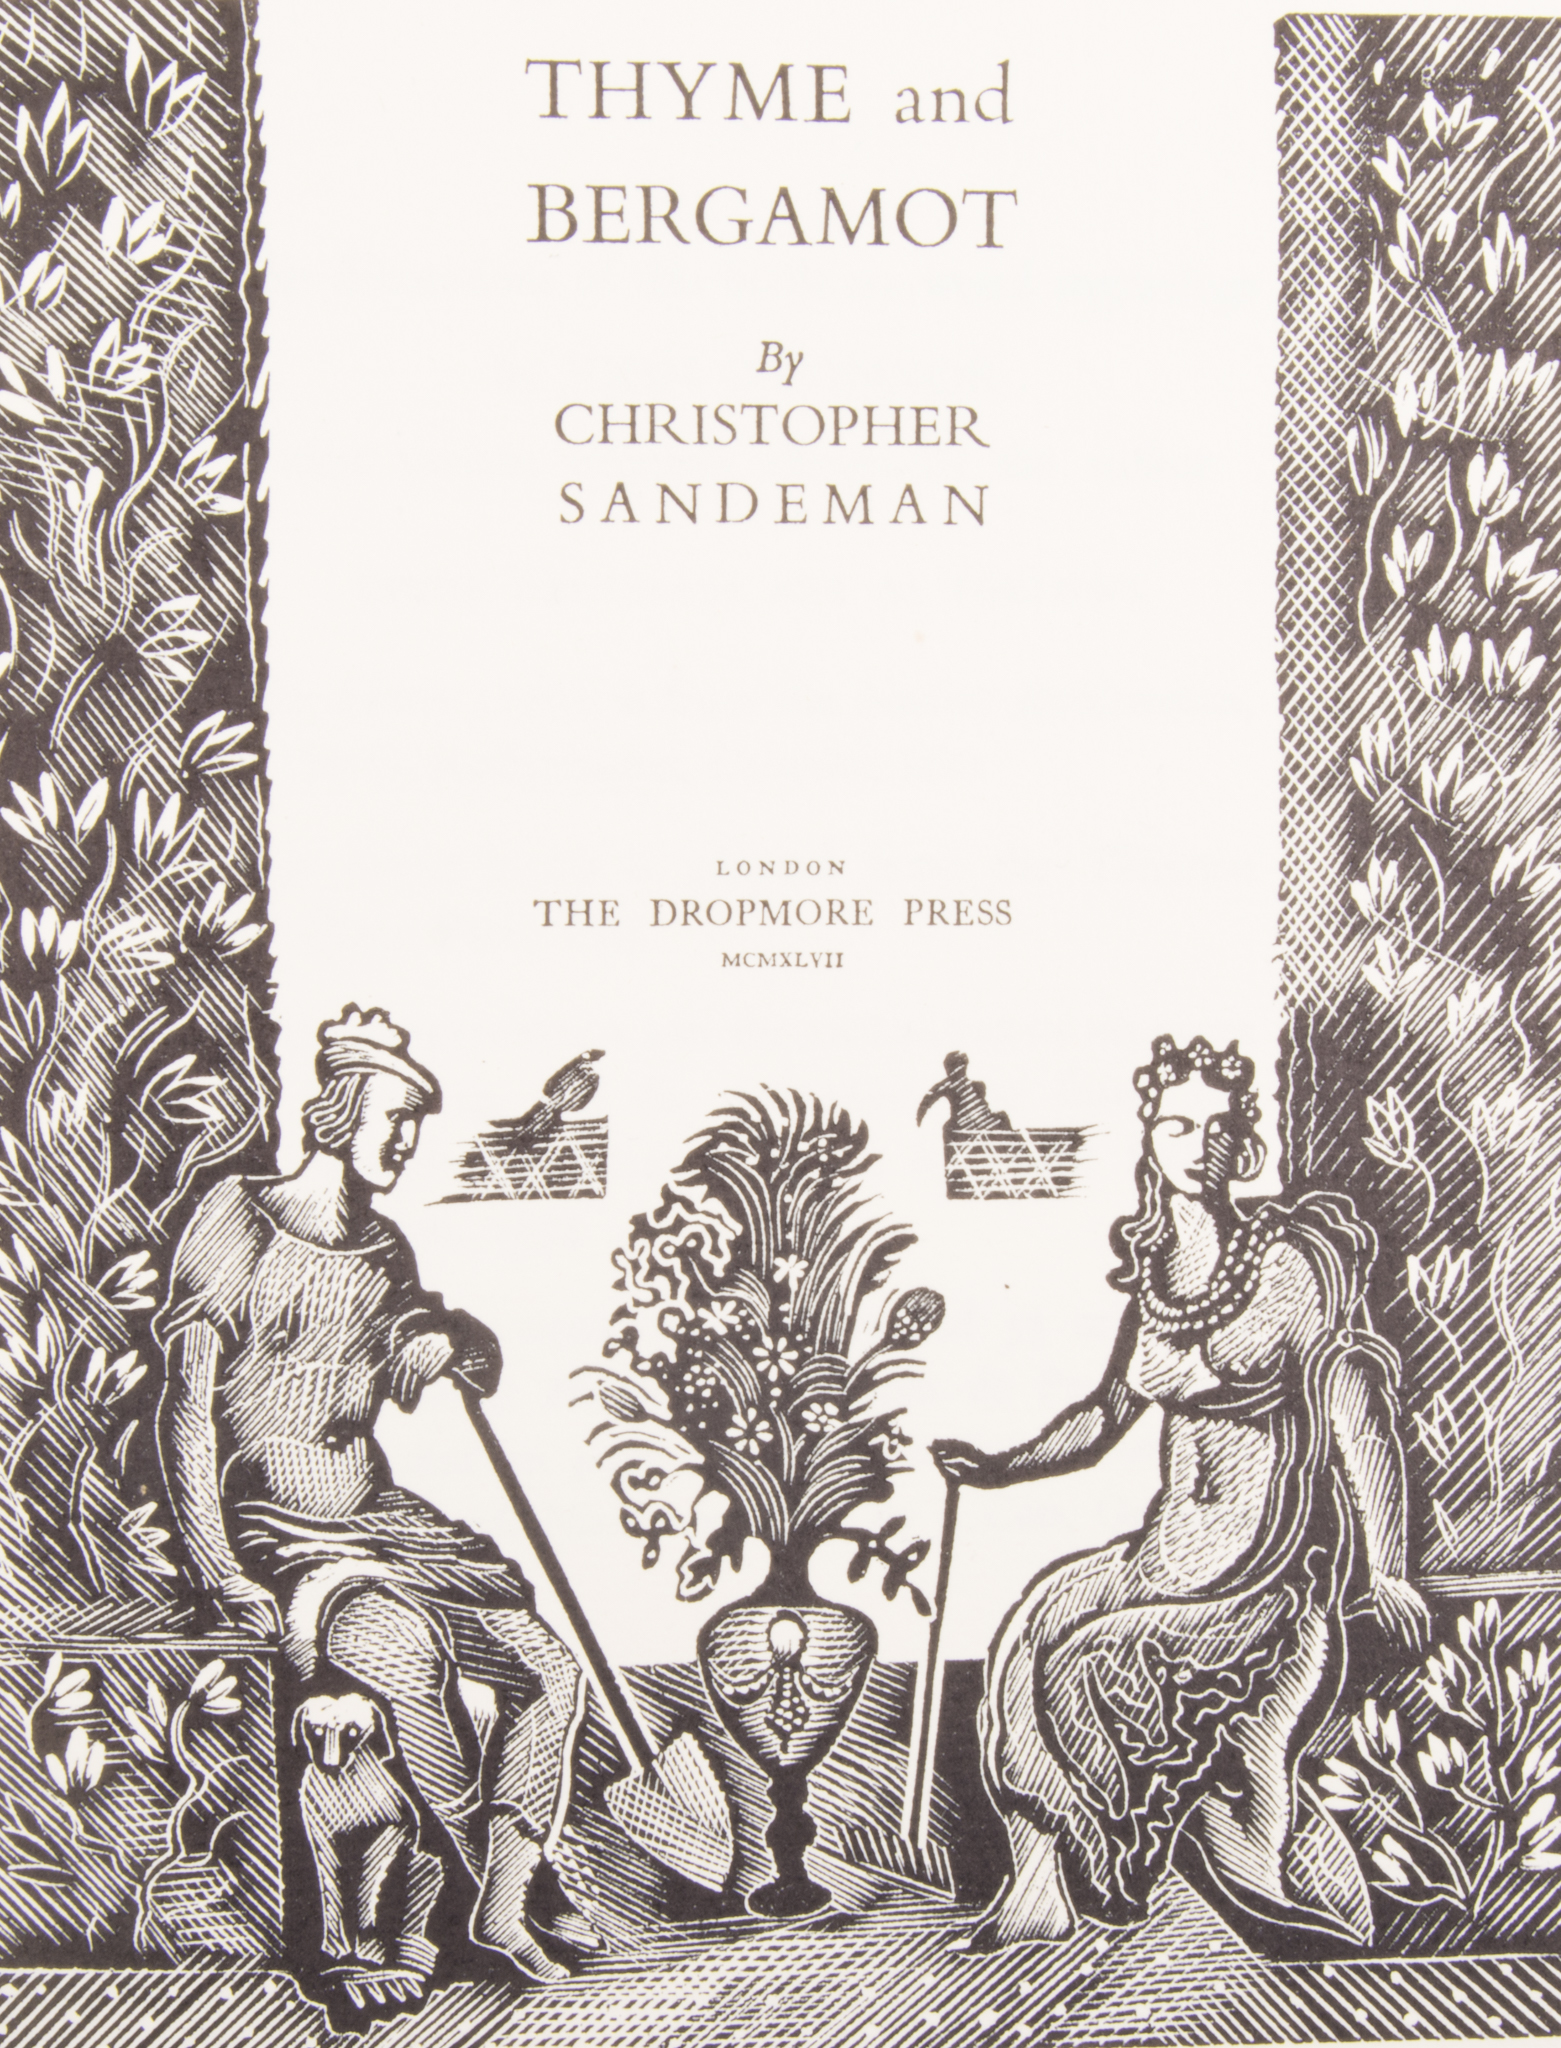 Christopher Sandeman, Thyme and Bergamot, Dropmore Press, London, 1947,